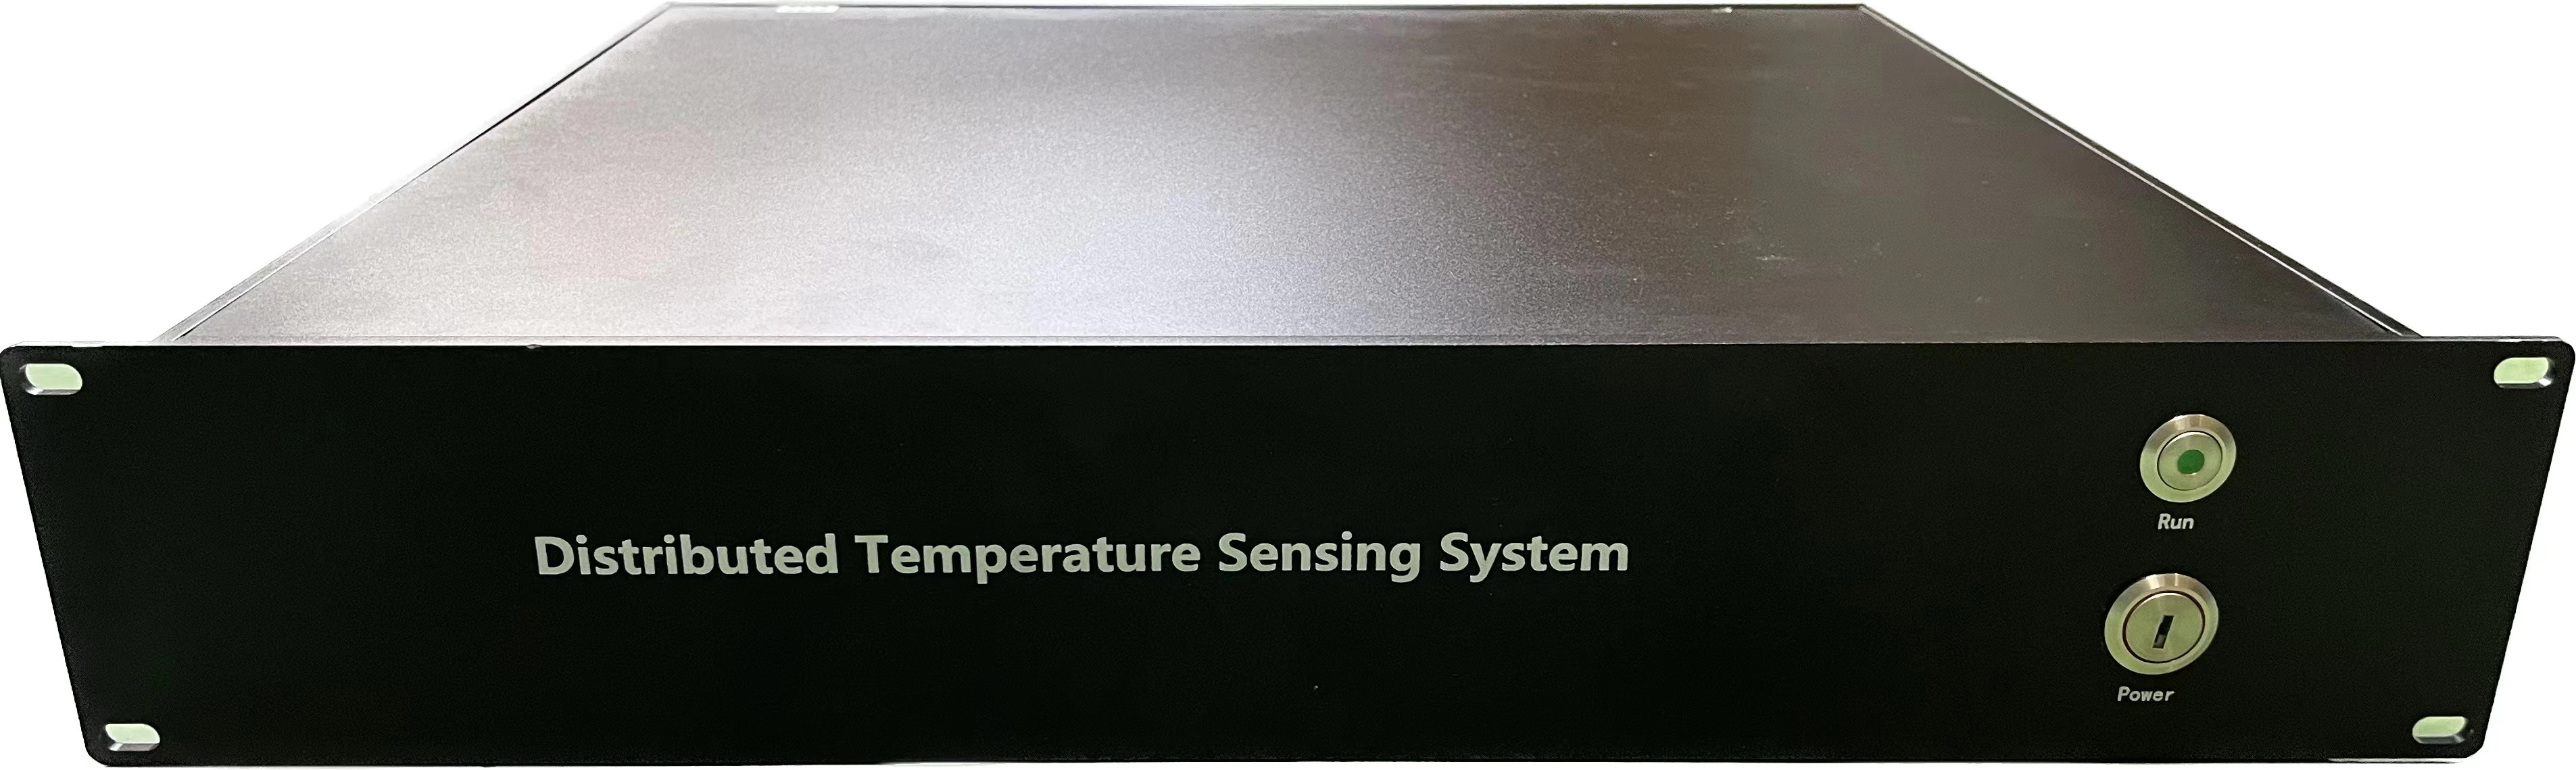 Distributed Temperature Sensing (DTS)